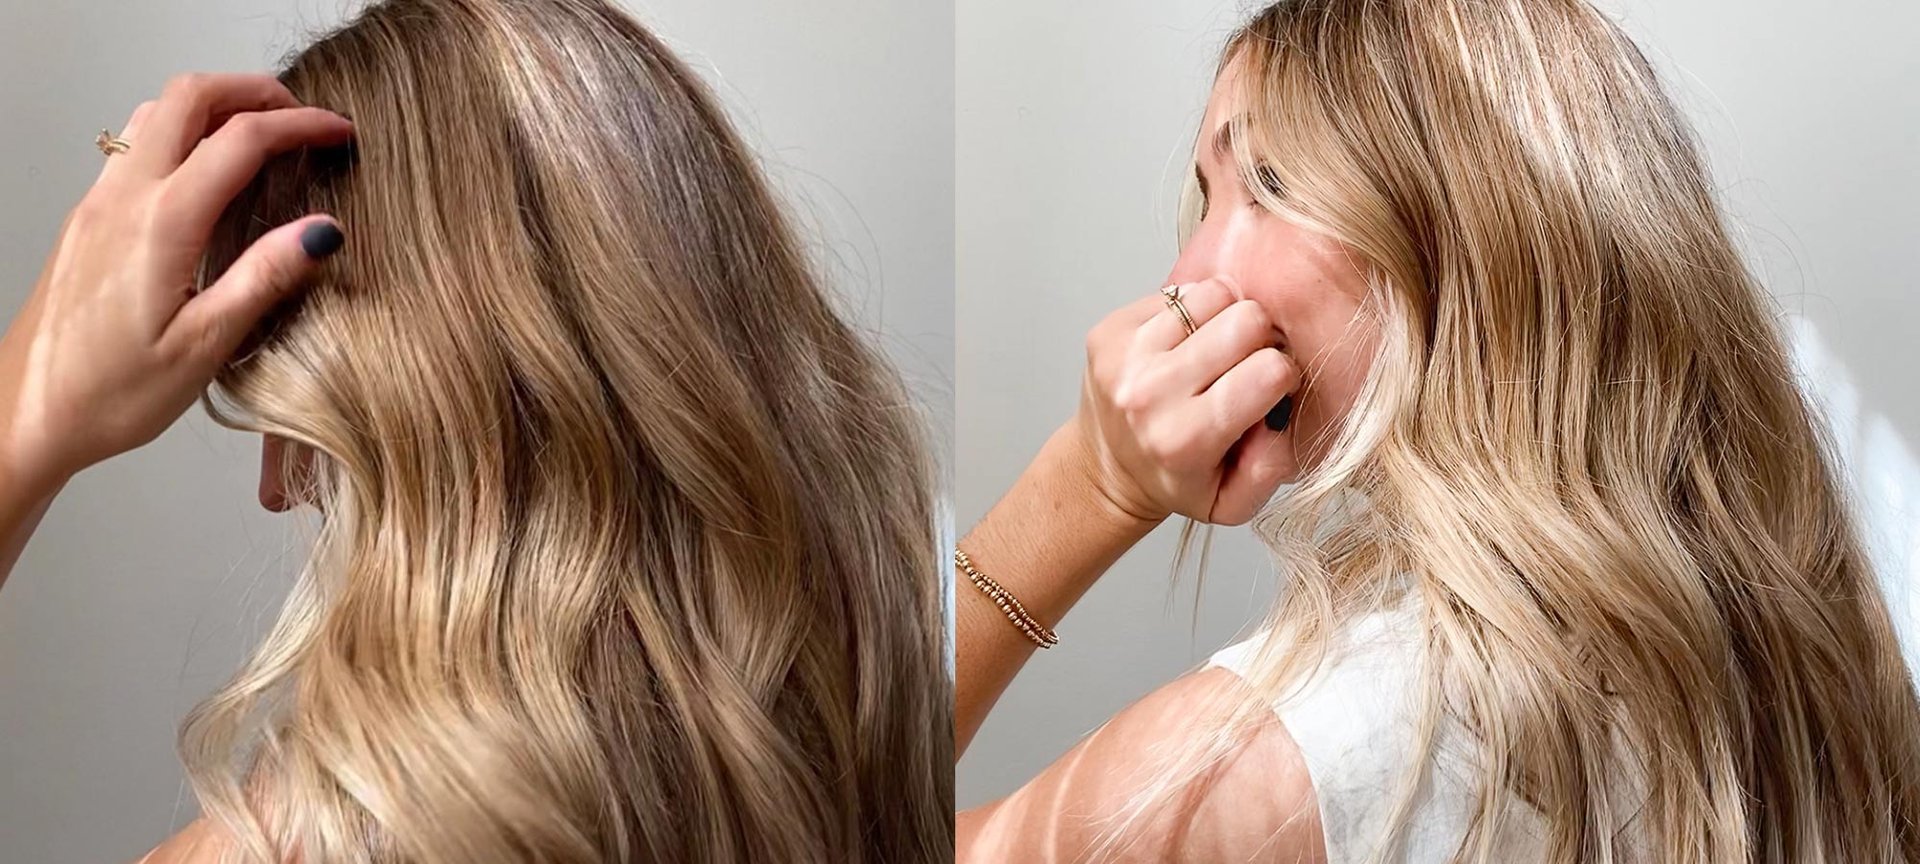 How To Use Permanent Hair Dye For Long Lasting Color - L'Oréal Paris